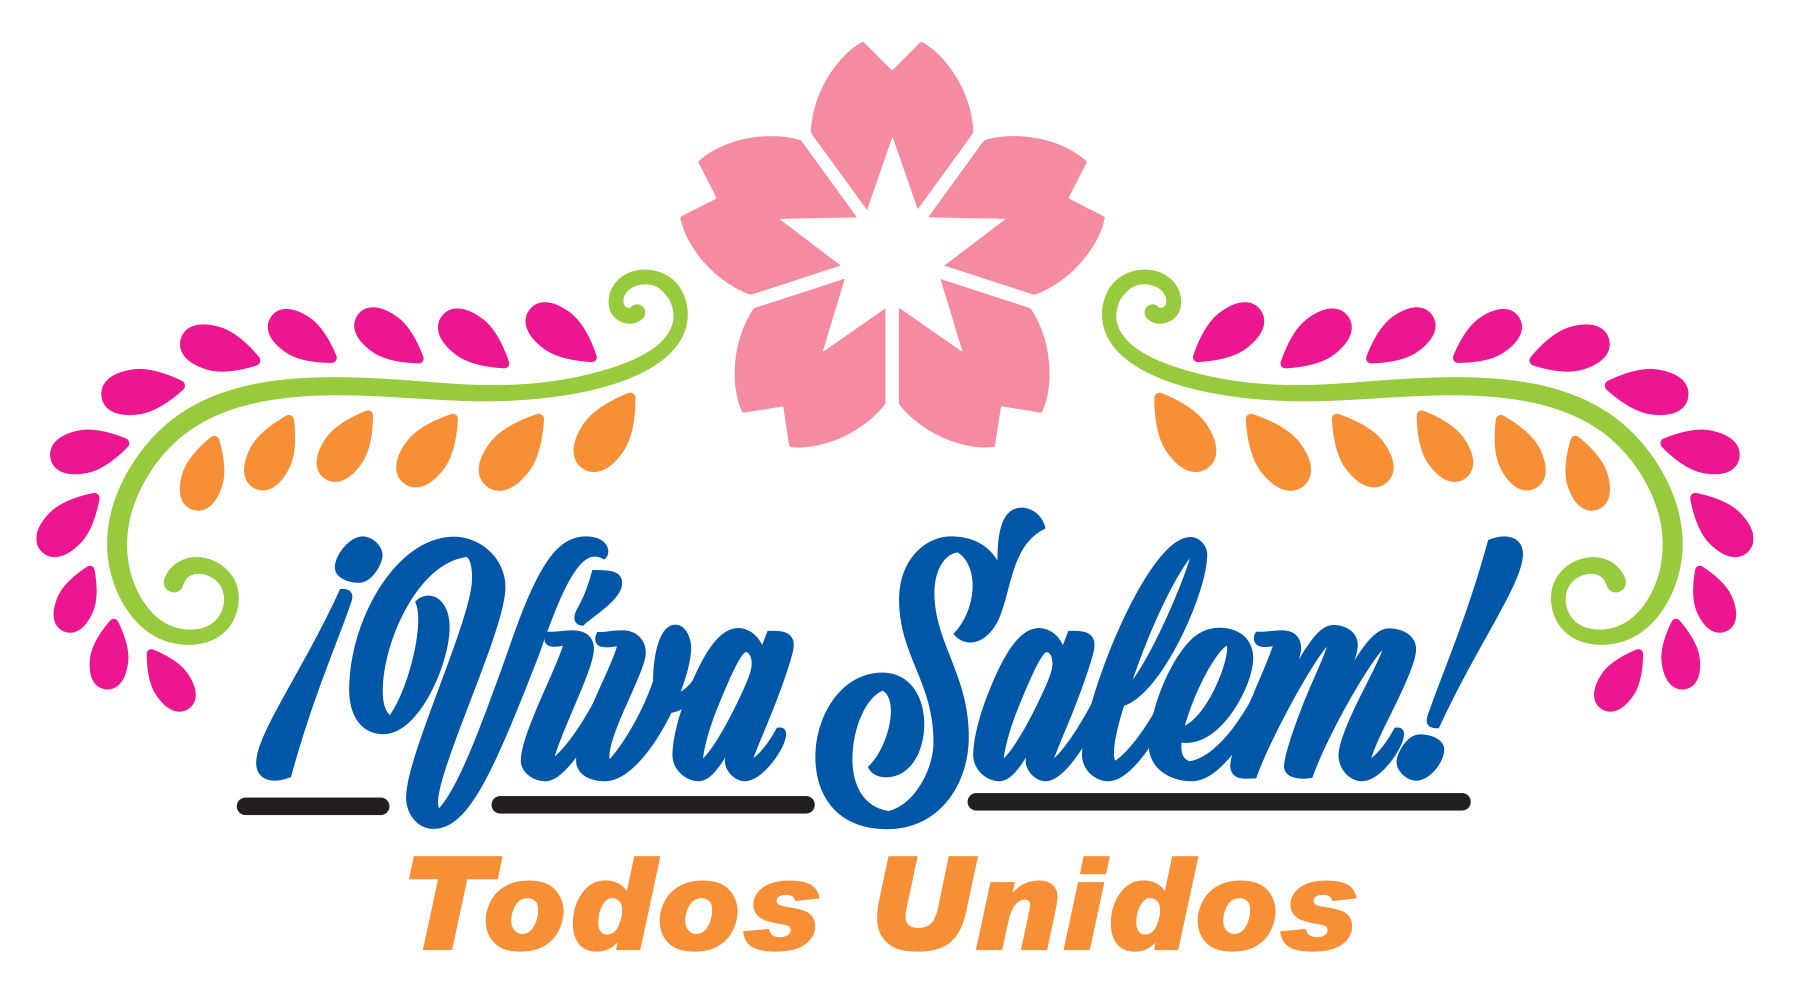 Viva Salem logo clear background